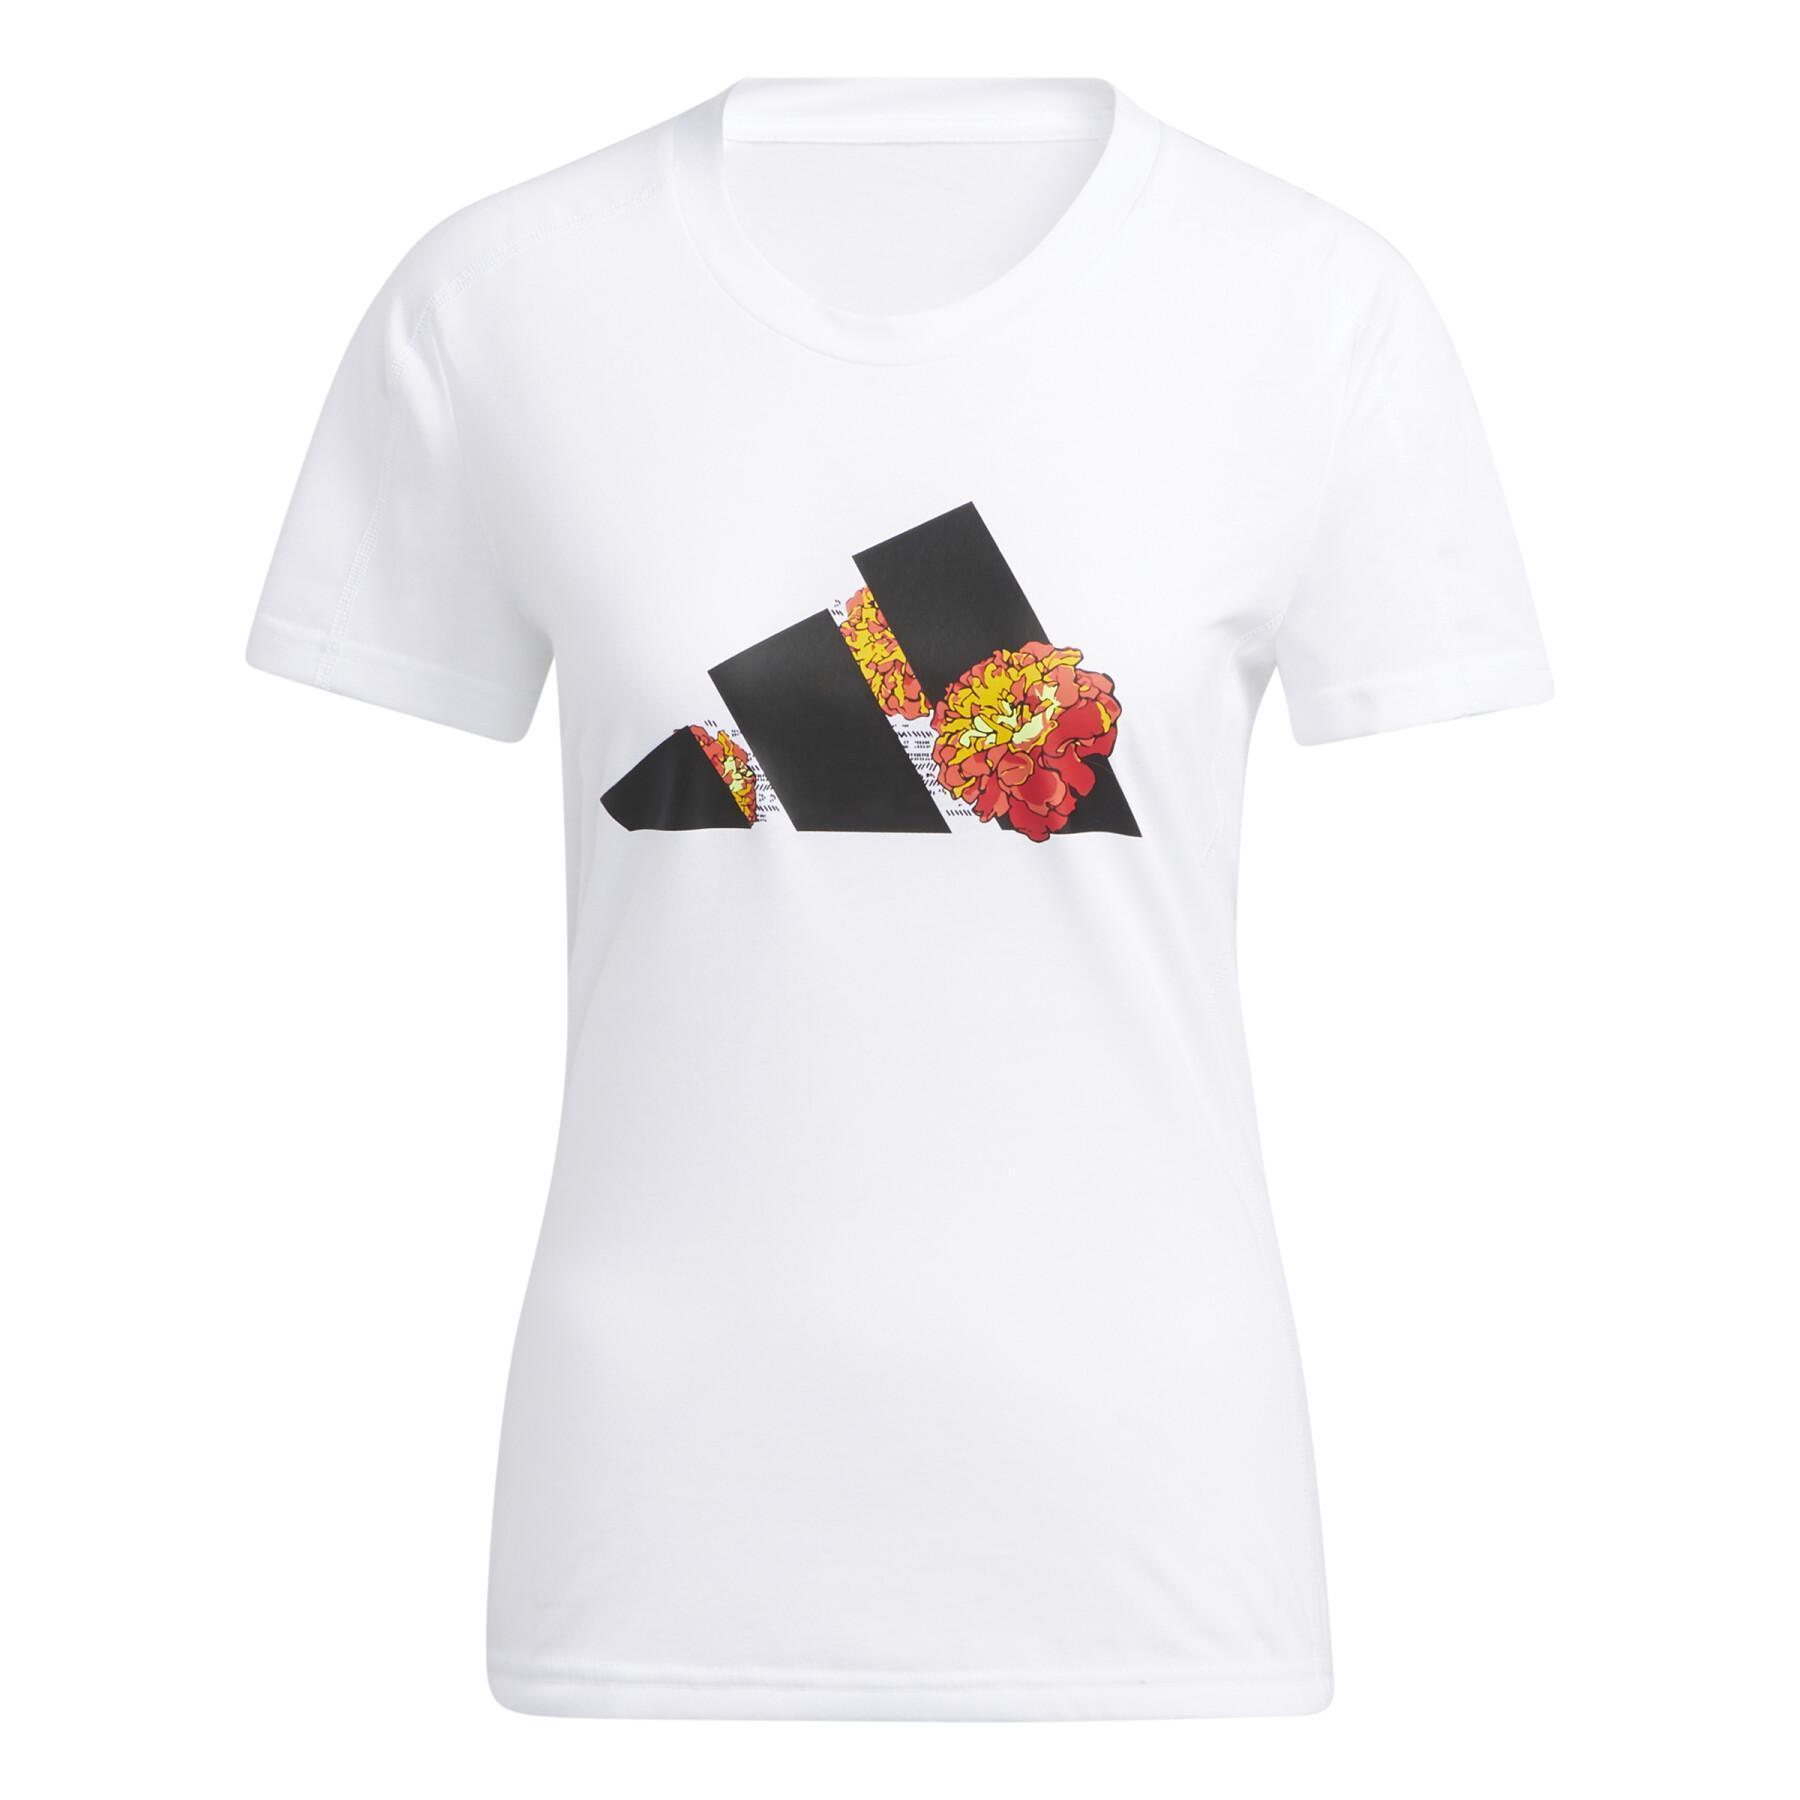 T-shirt femme adidas Aeroready